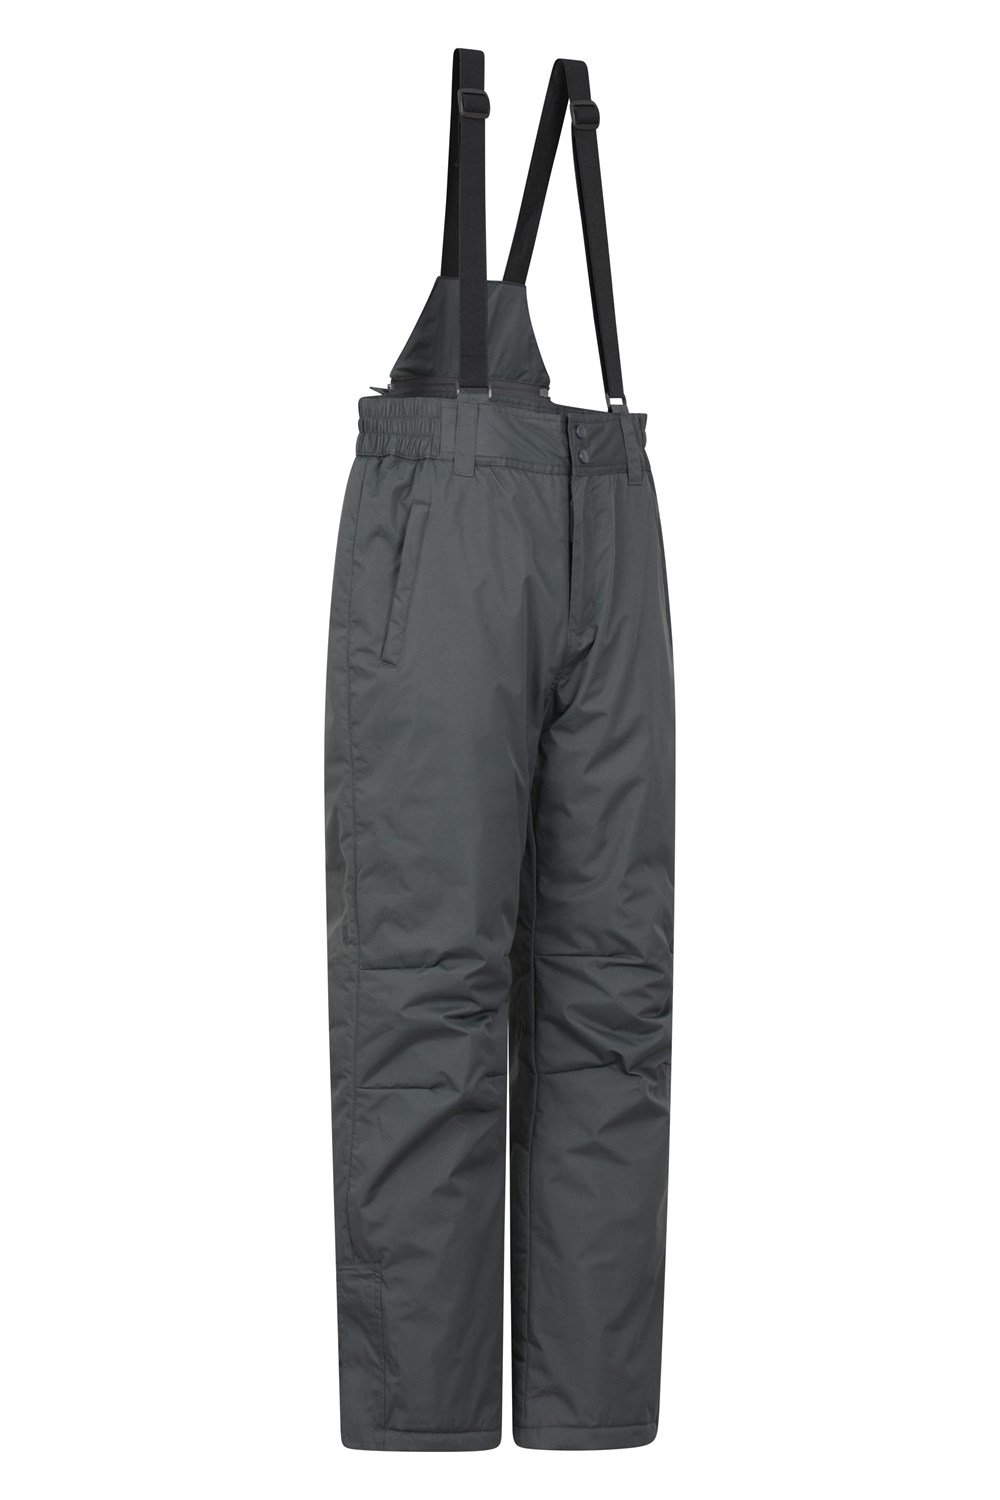 Mountain Warehouse Dusk Men's Ski Pants Snow Gaiters Trousers with Two ...